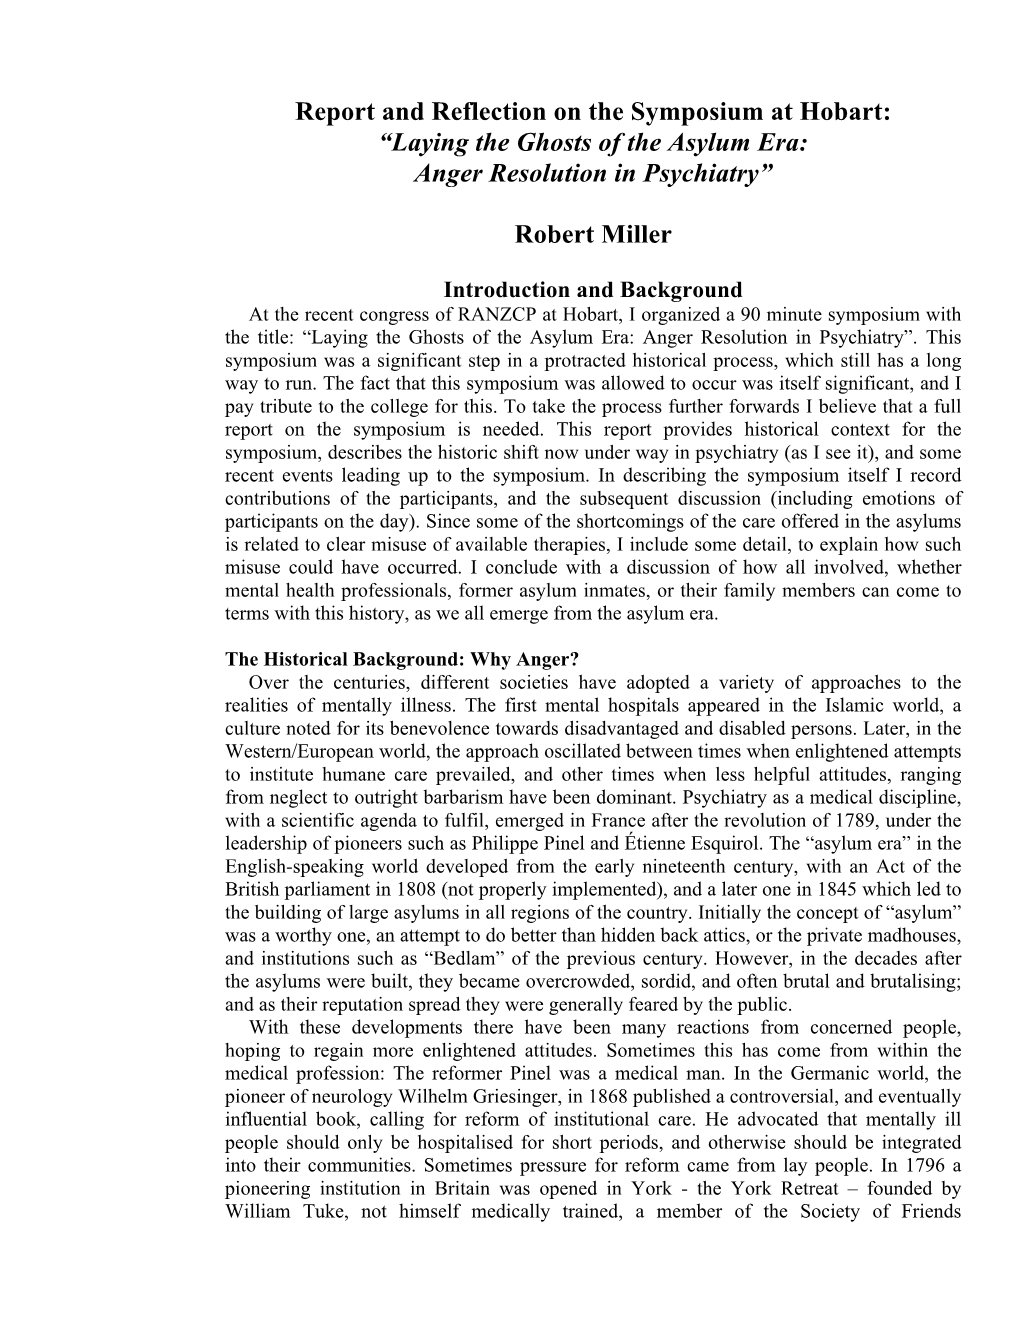 Report on Anger Resolution Symposium